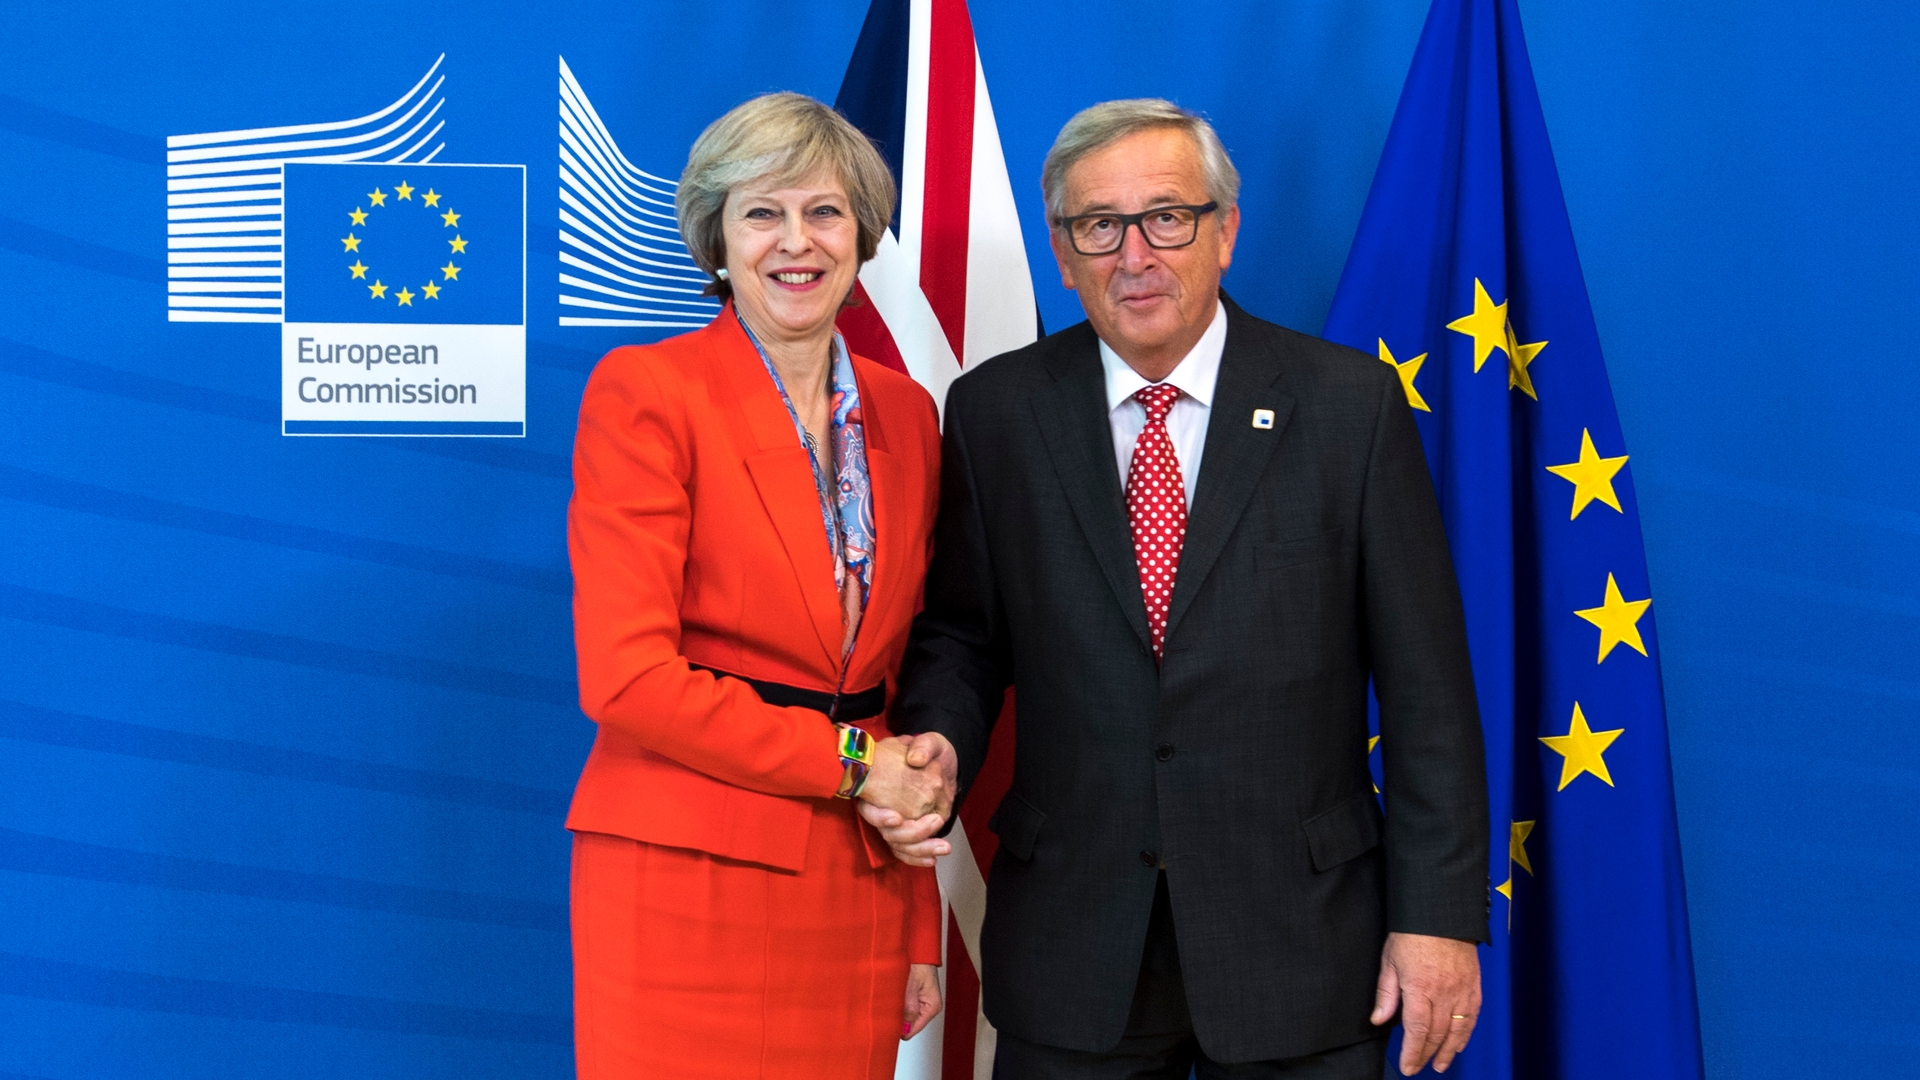 Prime Minister Attends EU Council